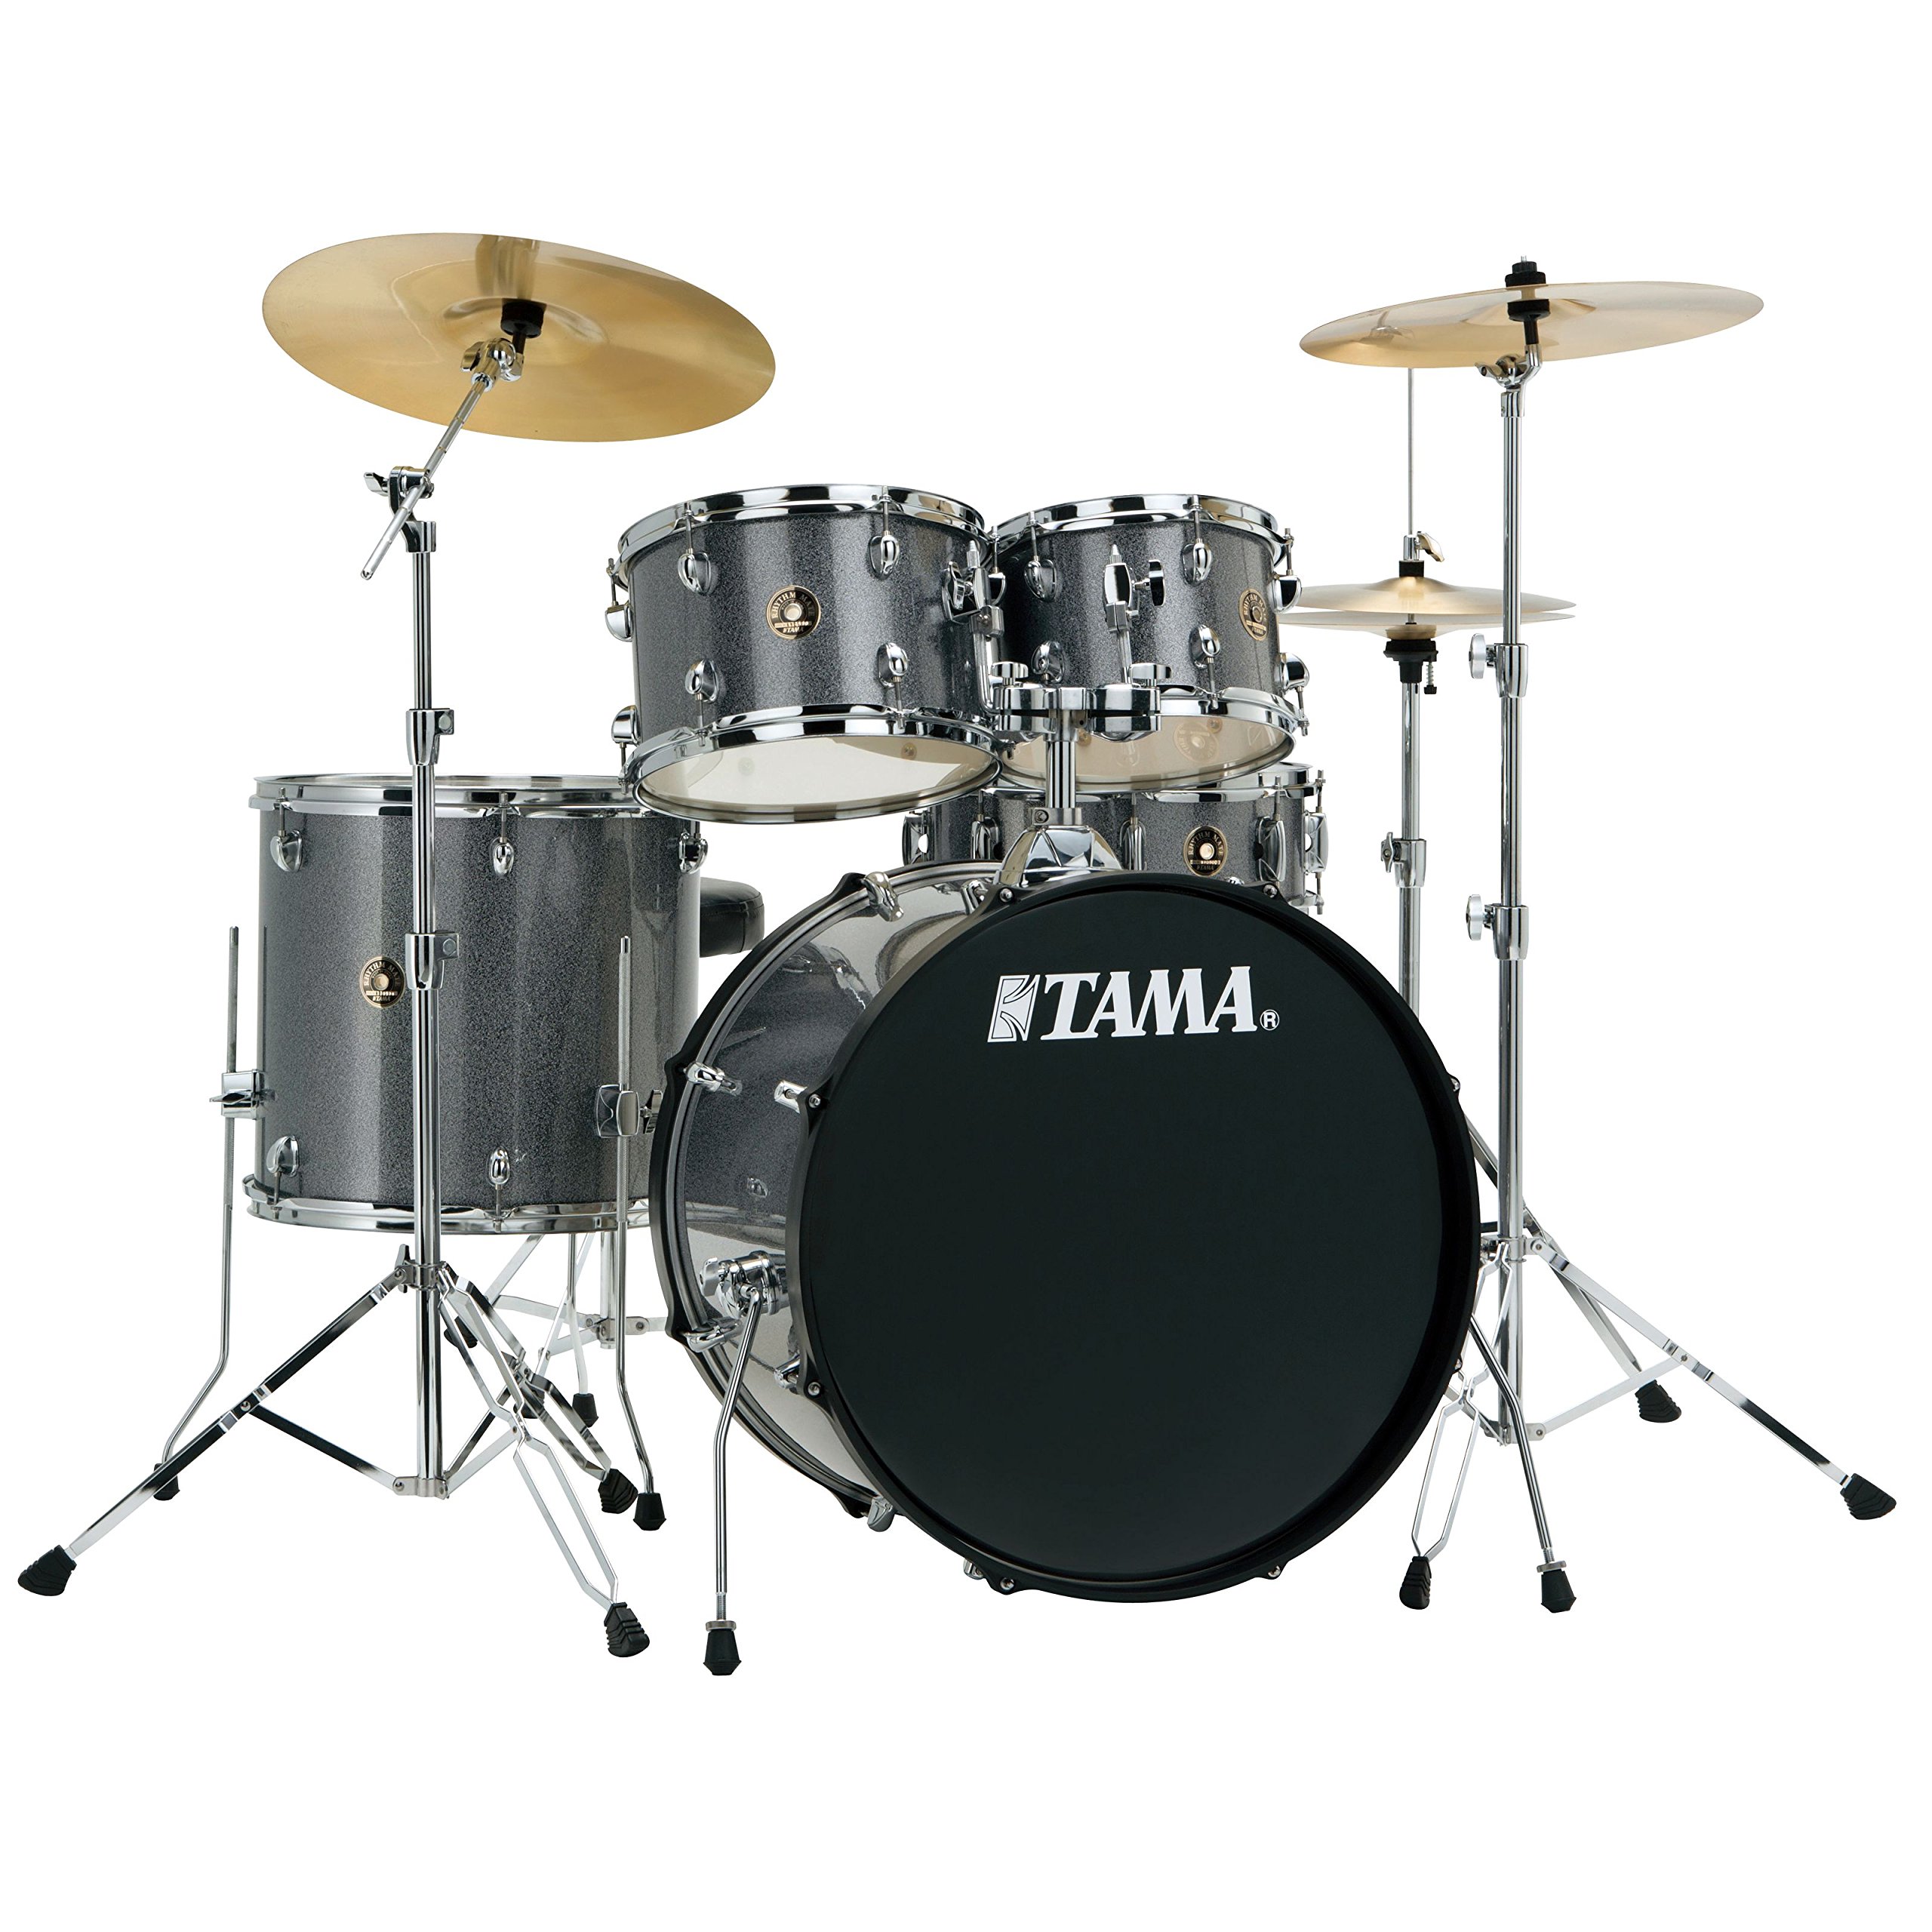 Tama RM50YH6-GXS Rhythm Mate Schlagzeug Set (5-teilig) mit 50,8 cm (20 Zoll) Bassdrum inkl. dreiteiligem Beckenset/6-teiliger Hardware Galaxy silber